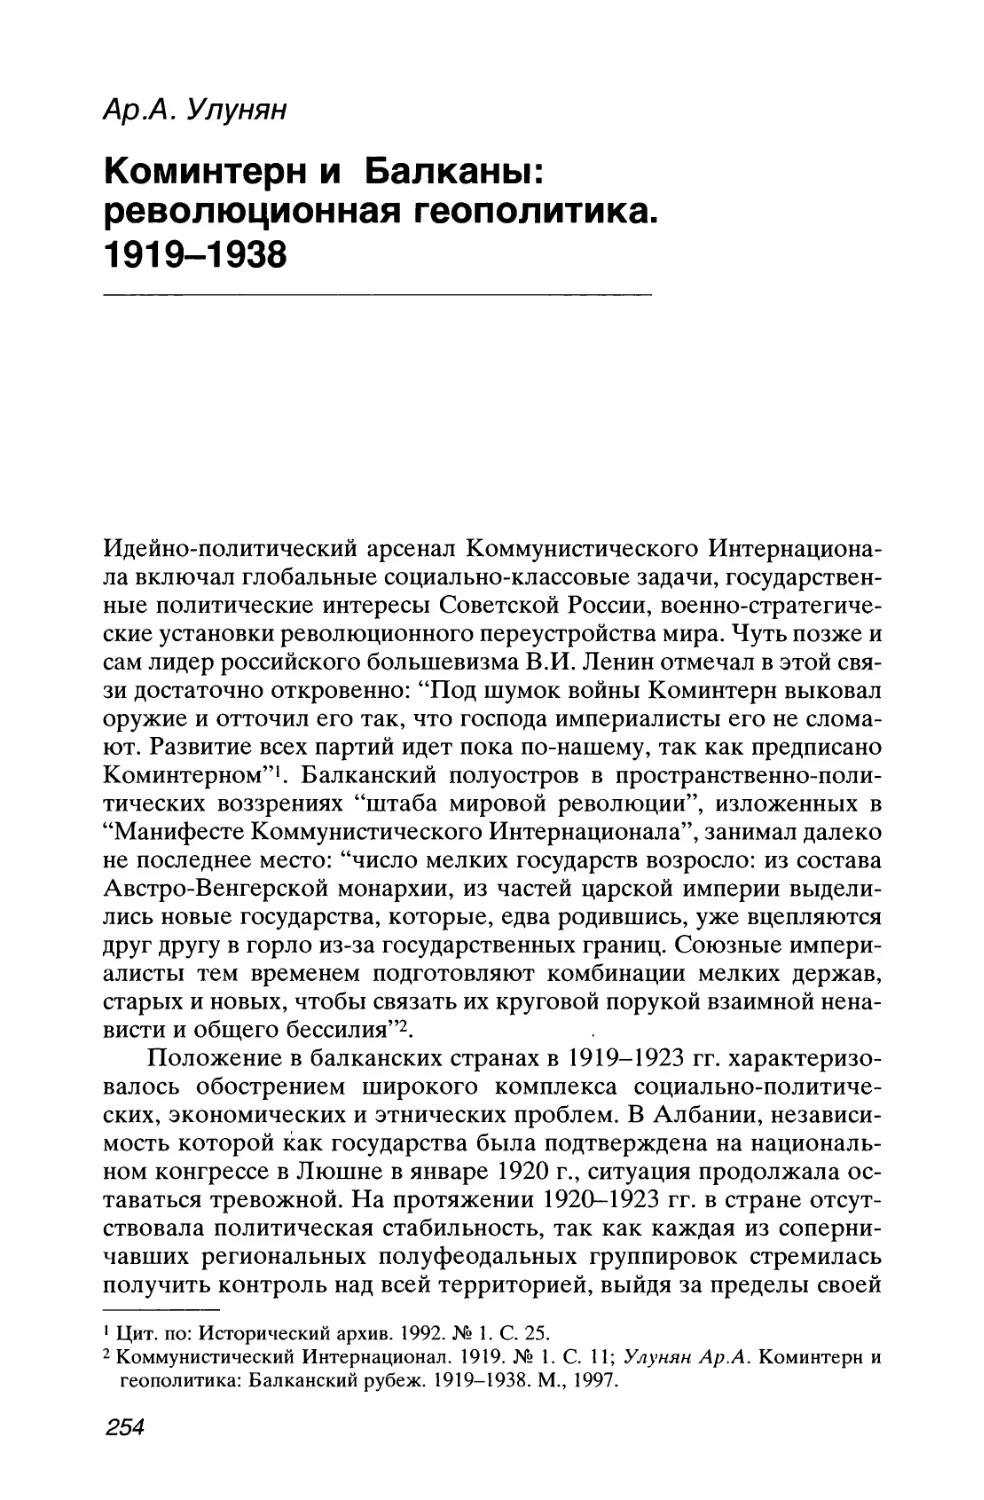 Коминтерн и Балканы: революционная геополитика. 1919-1938